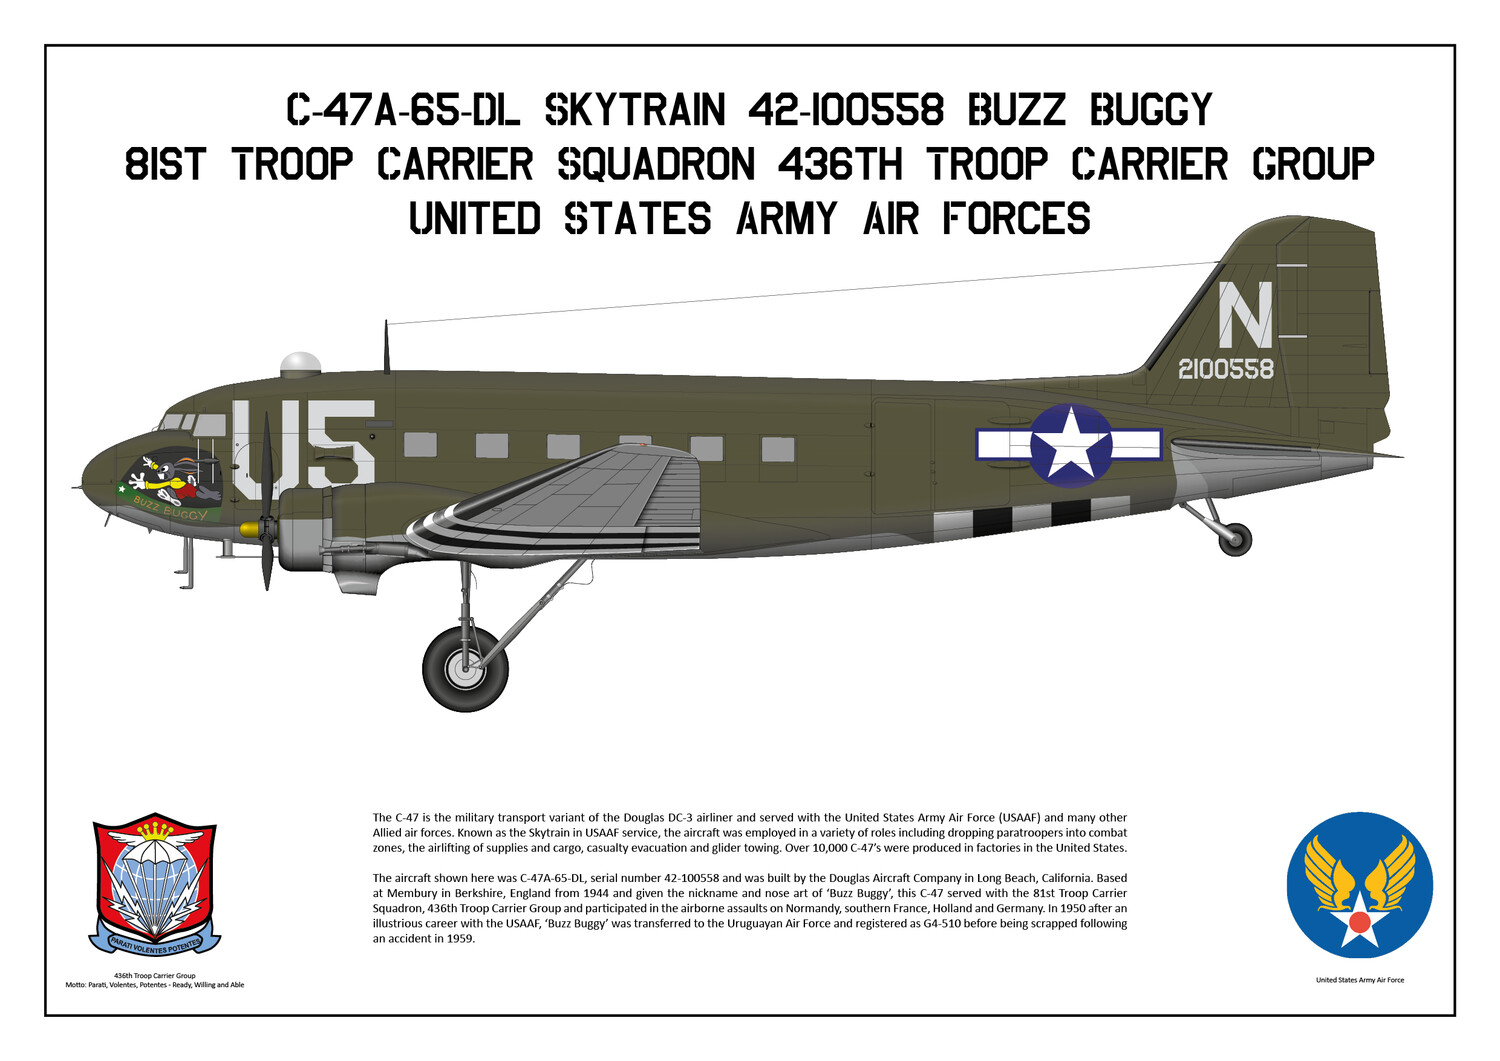 Douglas C-47 Skytrain "Buzz Buggy"